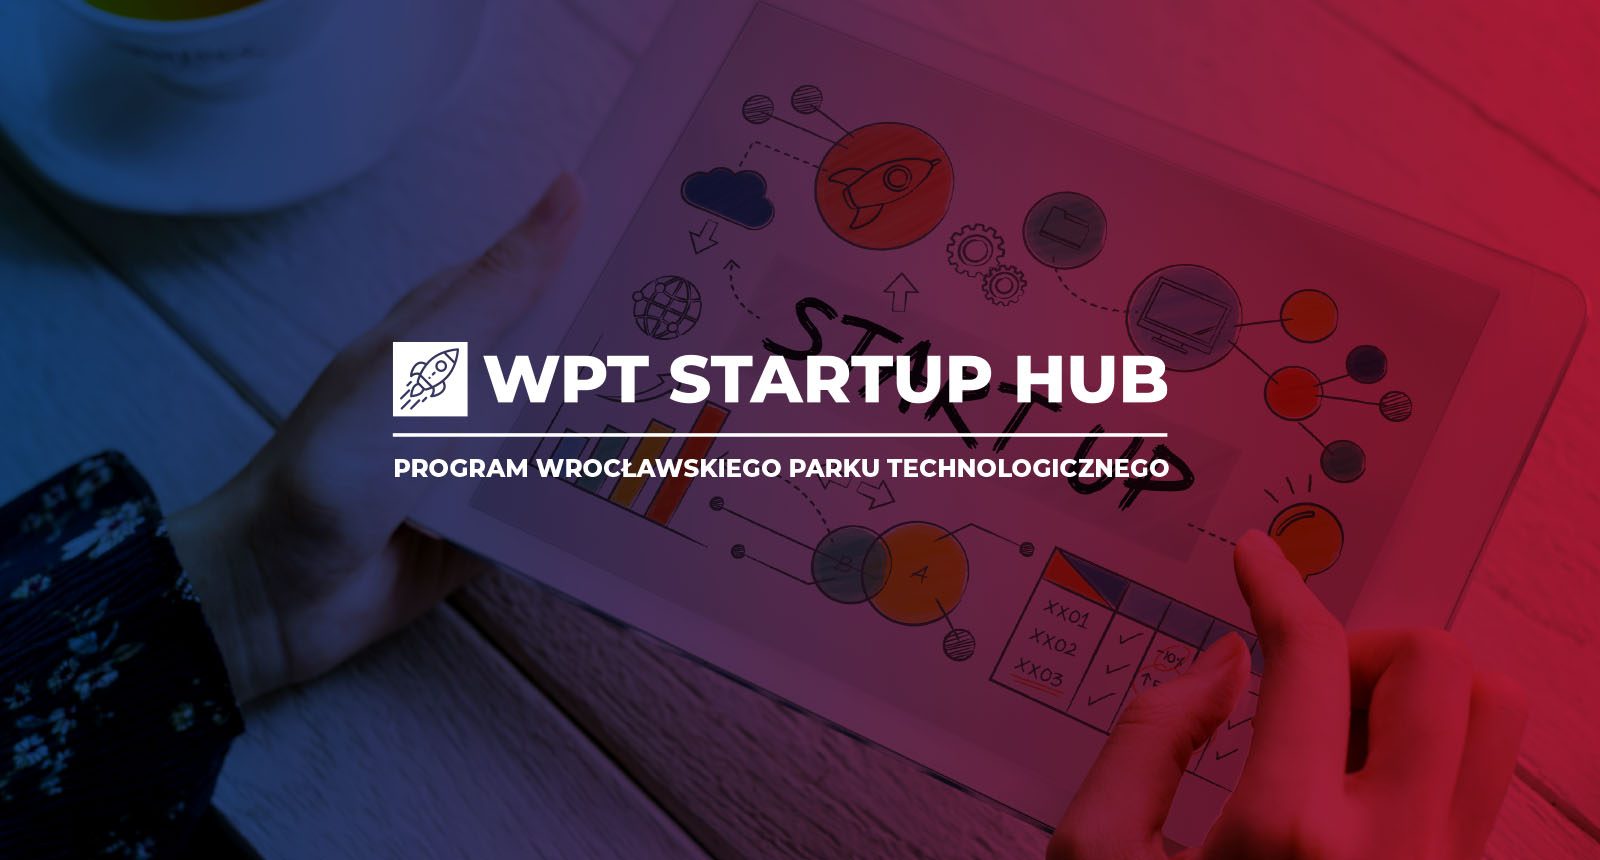 WPT Startup hub